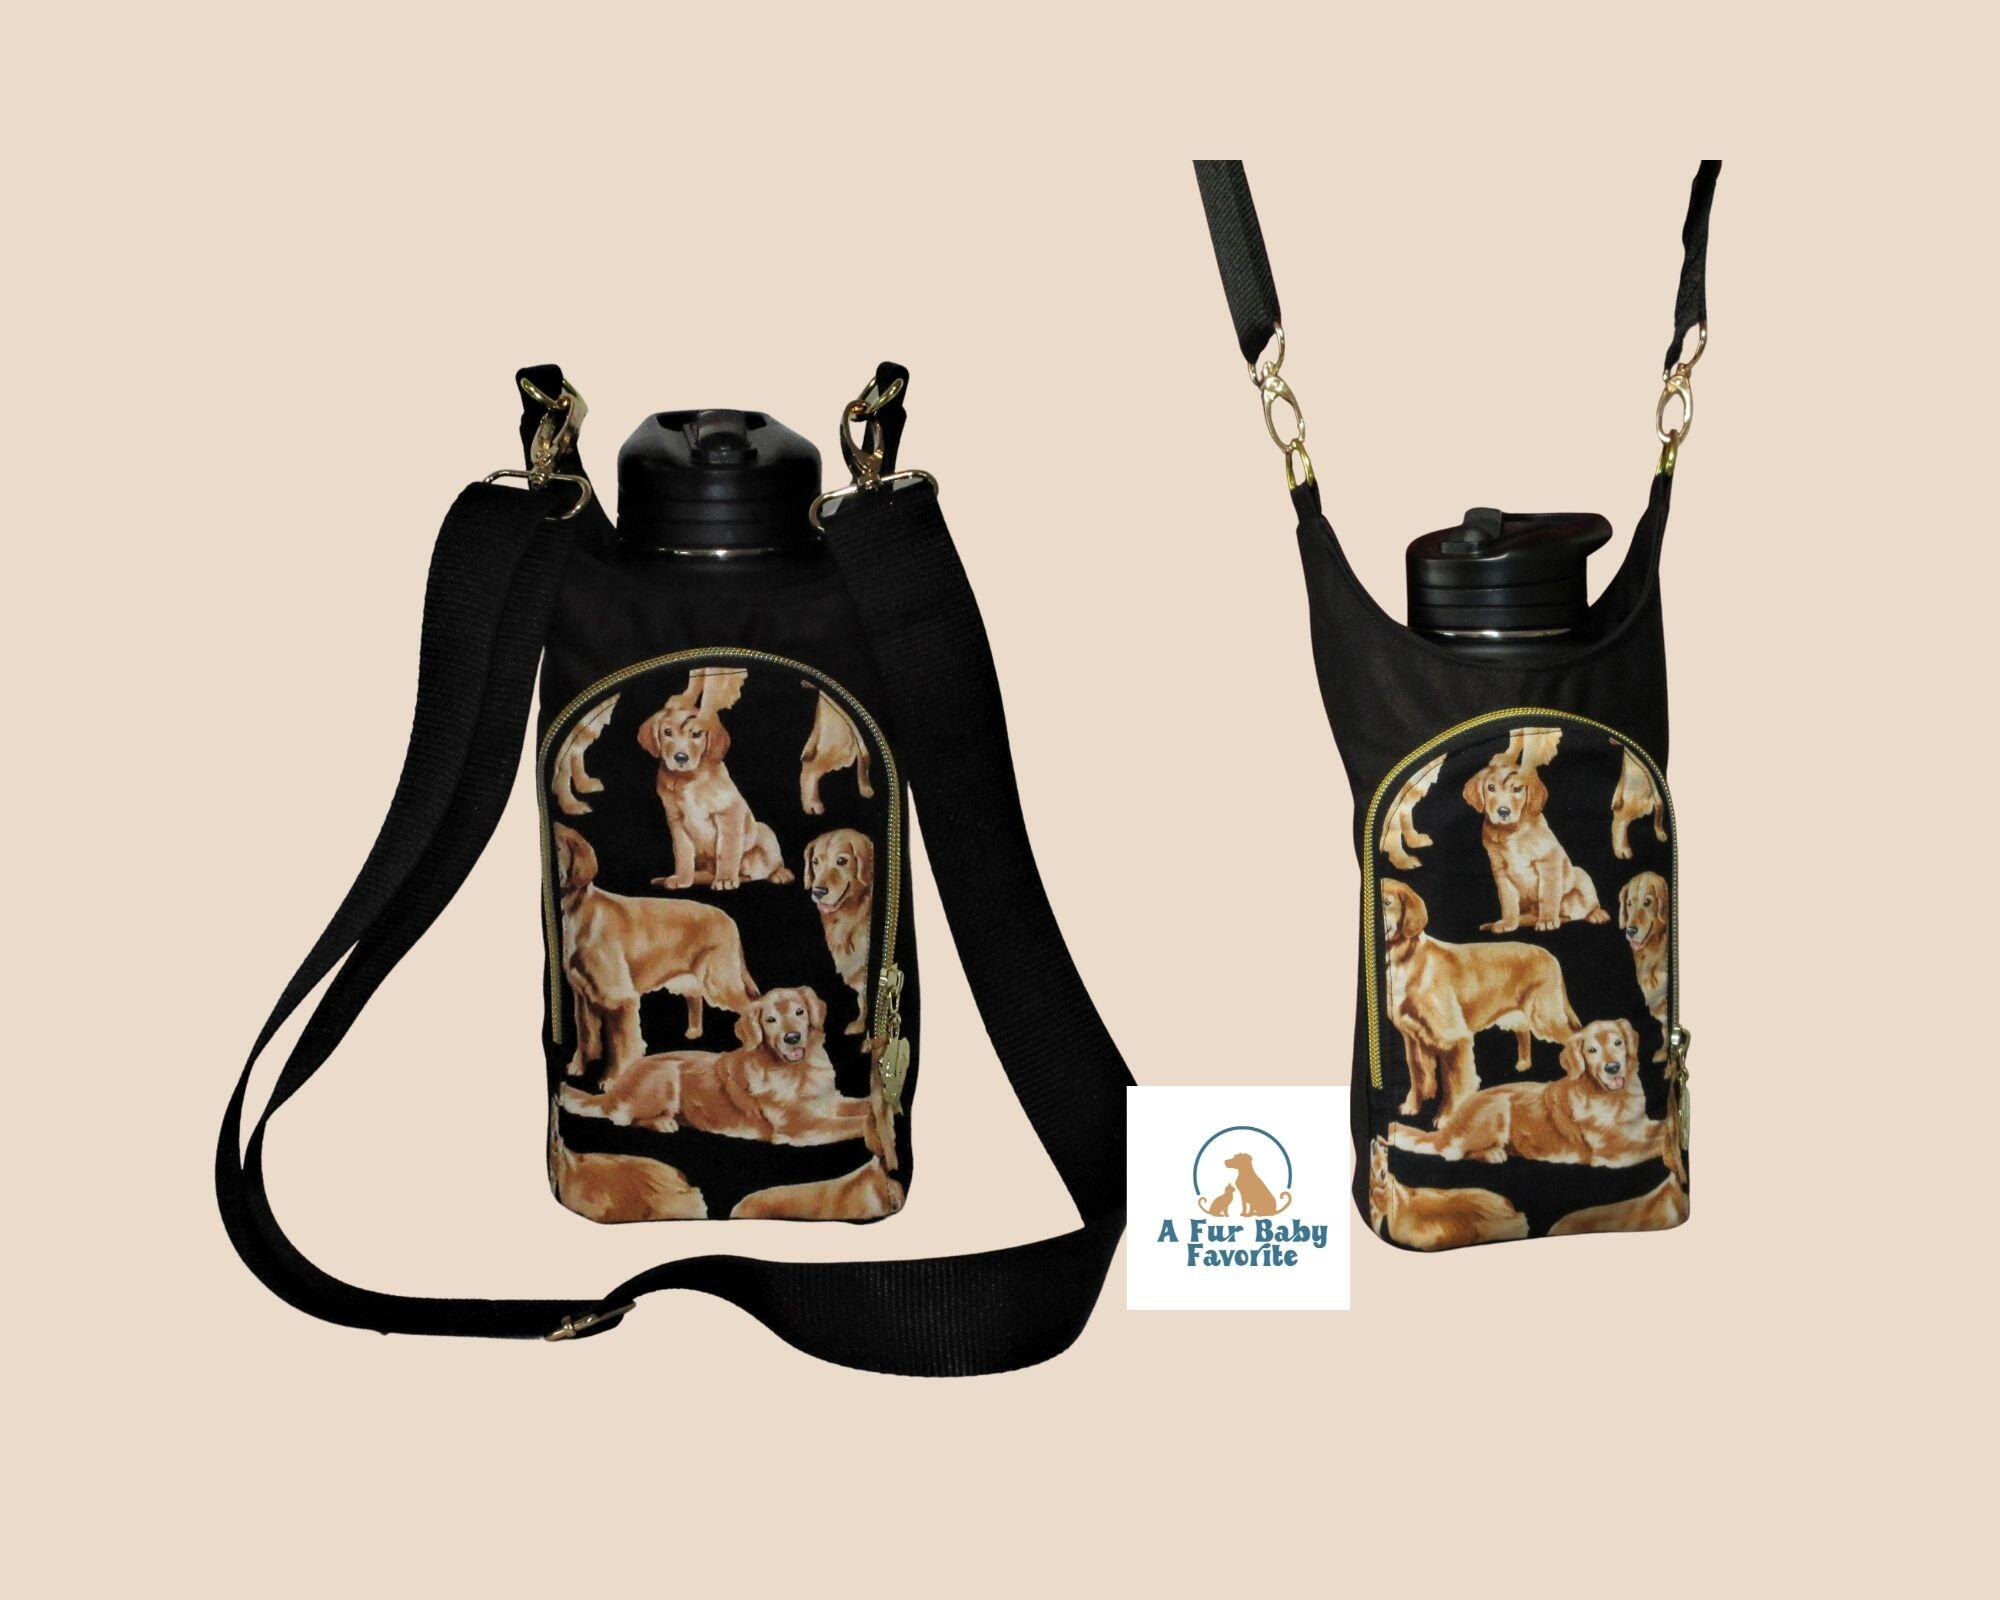 Golden Retriever Dogs print Cross Body Sling Bag. Holds Large Water bottles, Wine, other beverages. A fur baby favorite water bottle holder